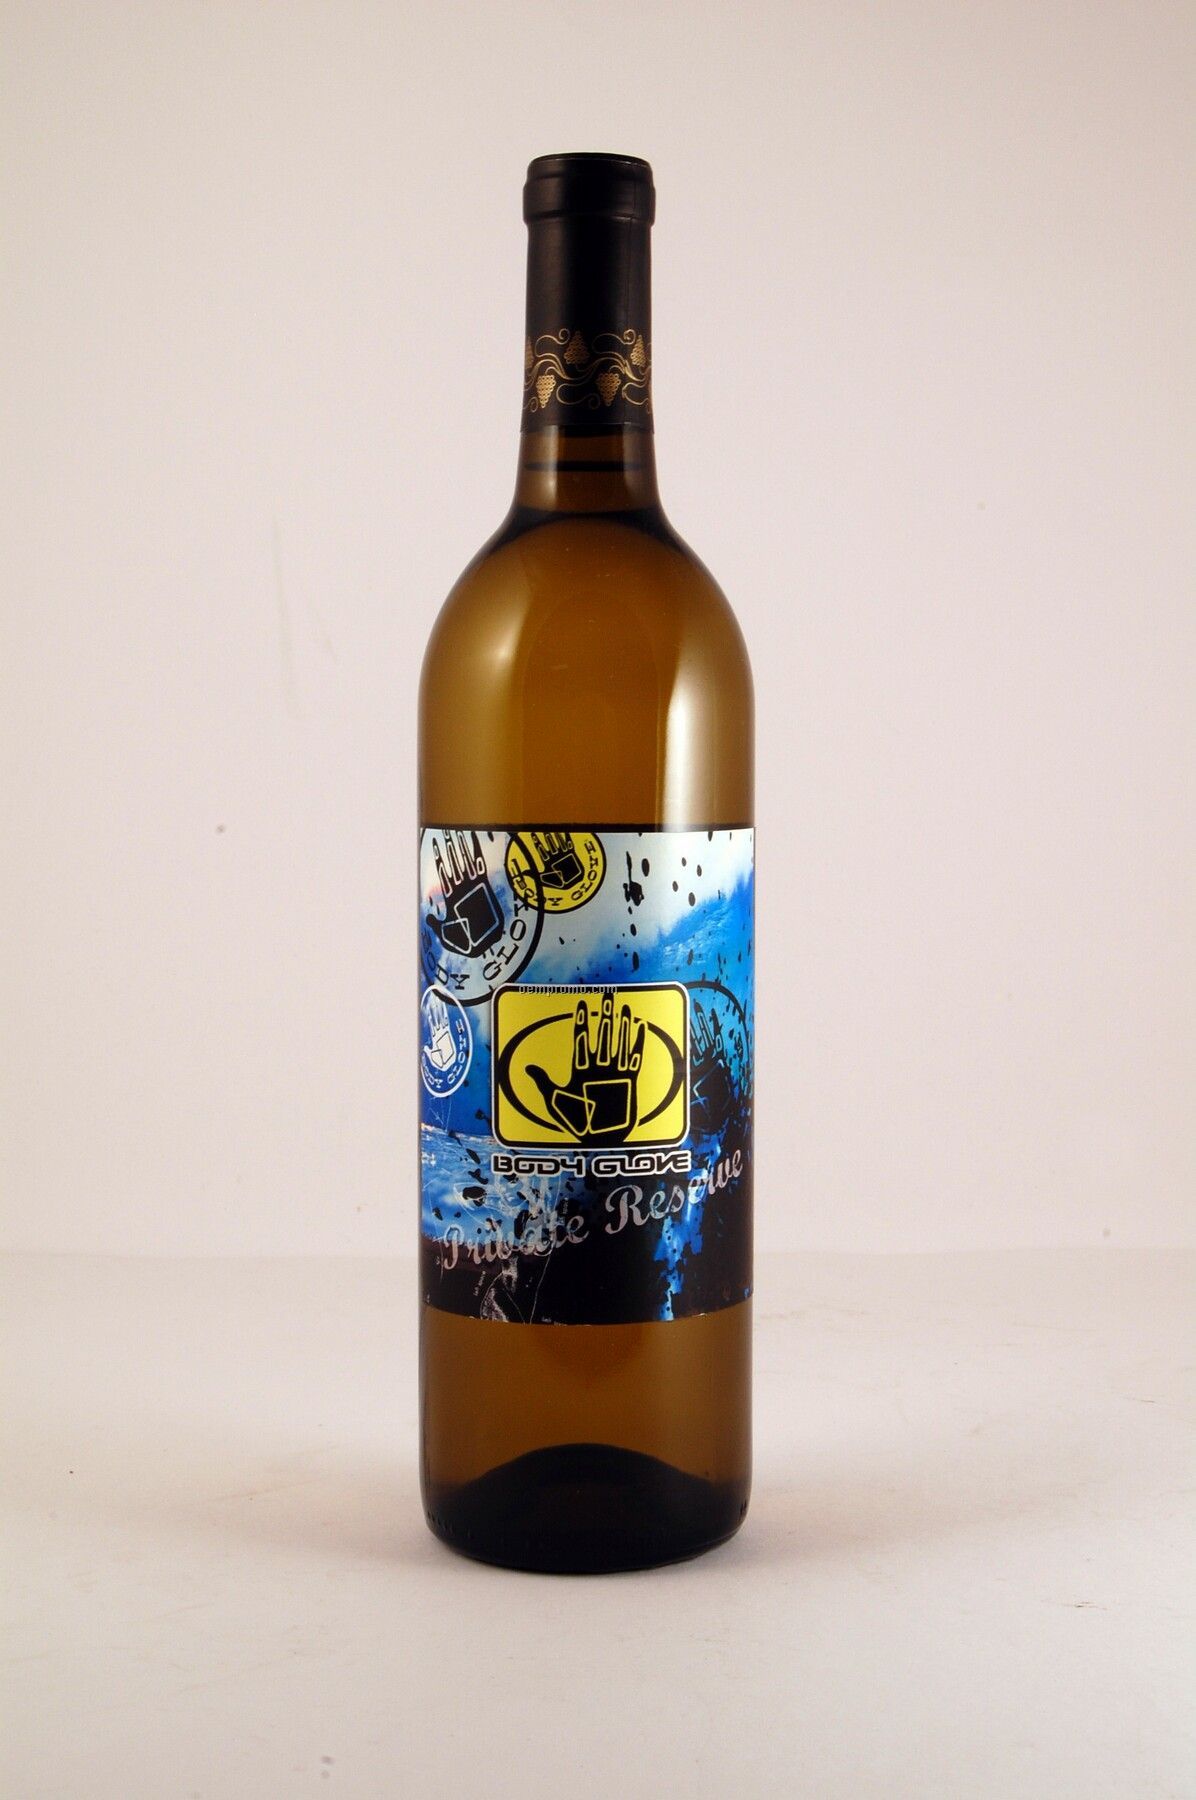 2009 Wv Chardonnay, Russian River Valley, Platinum (Custom Labeled Wine)